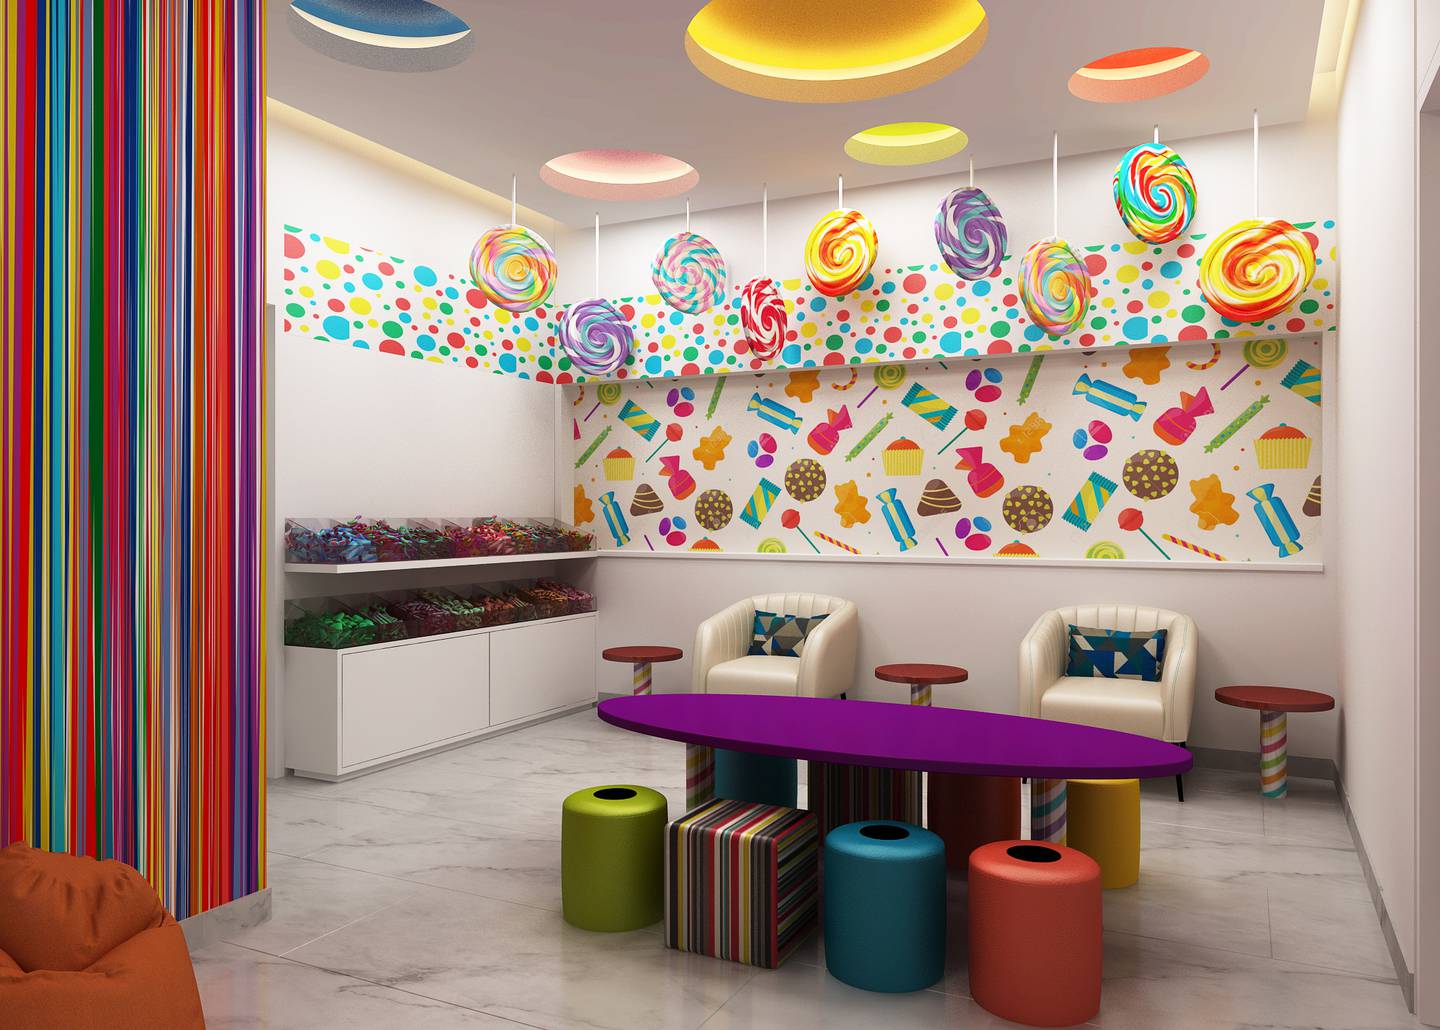 The children's candy-themed spa at Centara Mirage Beach Resort Dubai. Photo: Centara Hotels & resorts